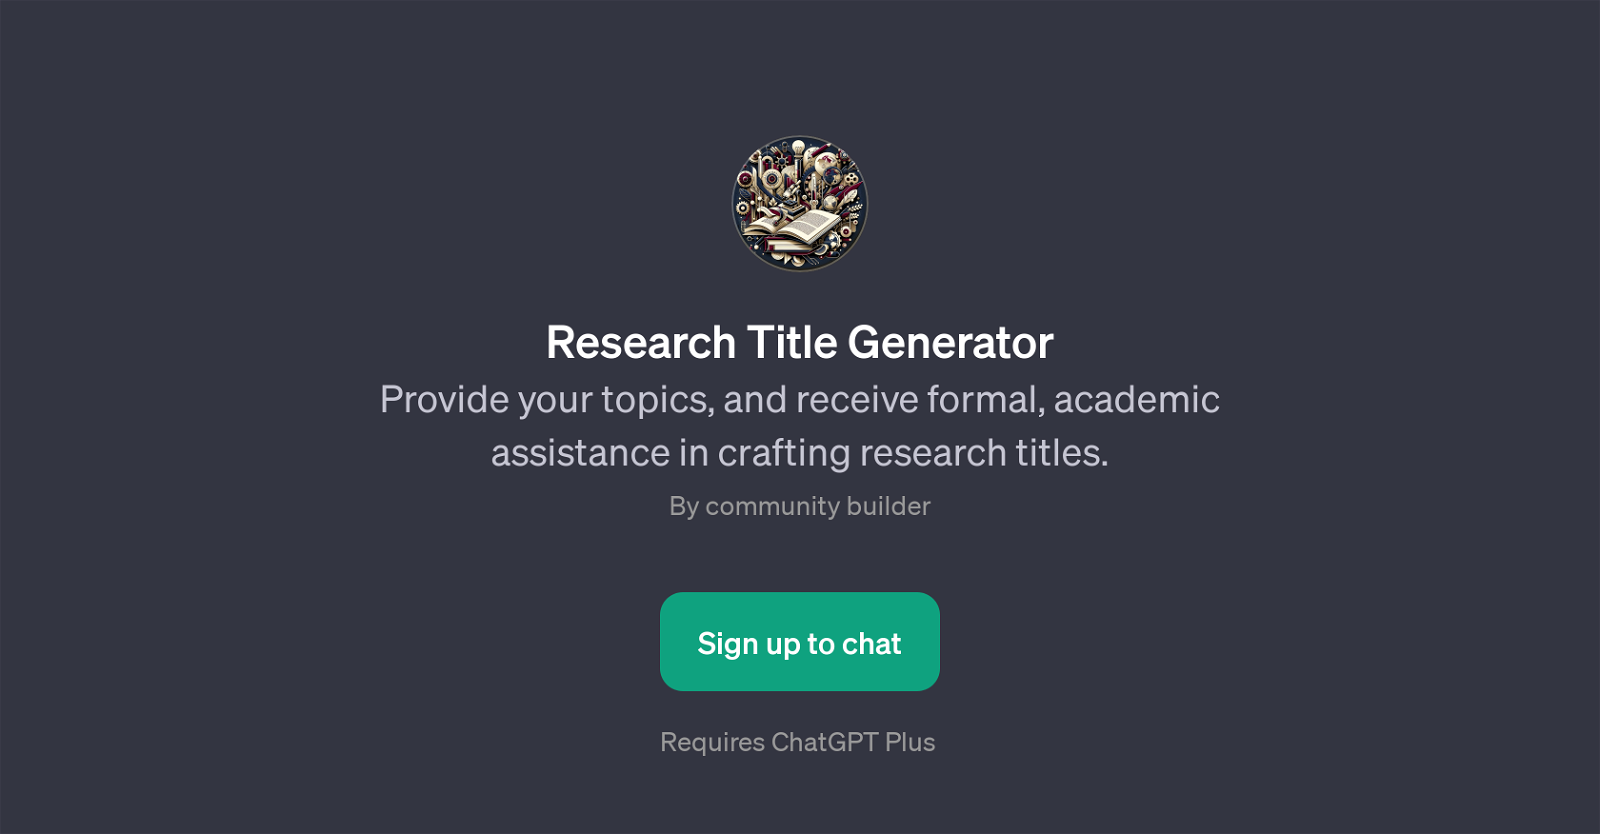 Research Title Generator website